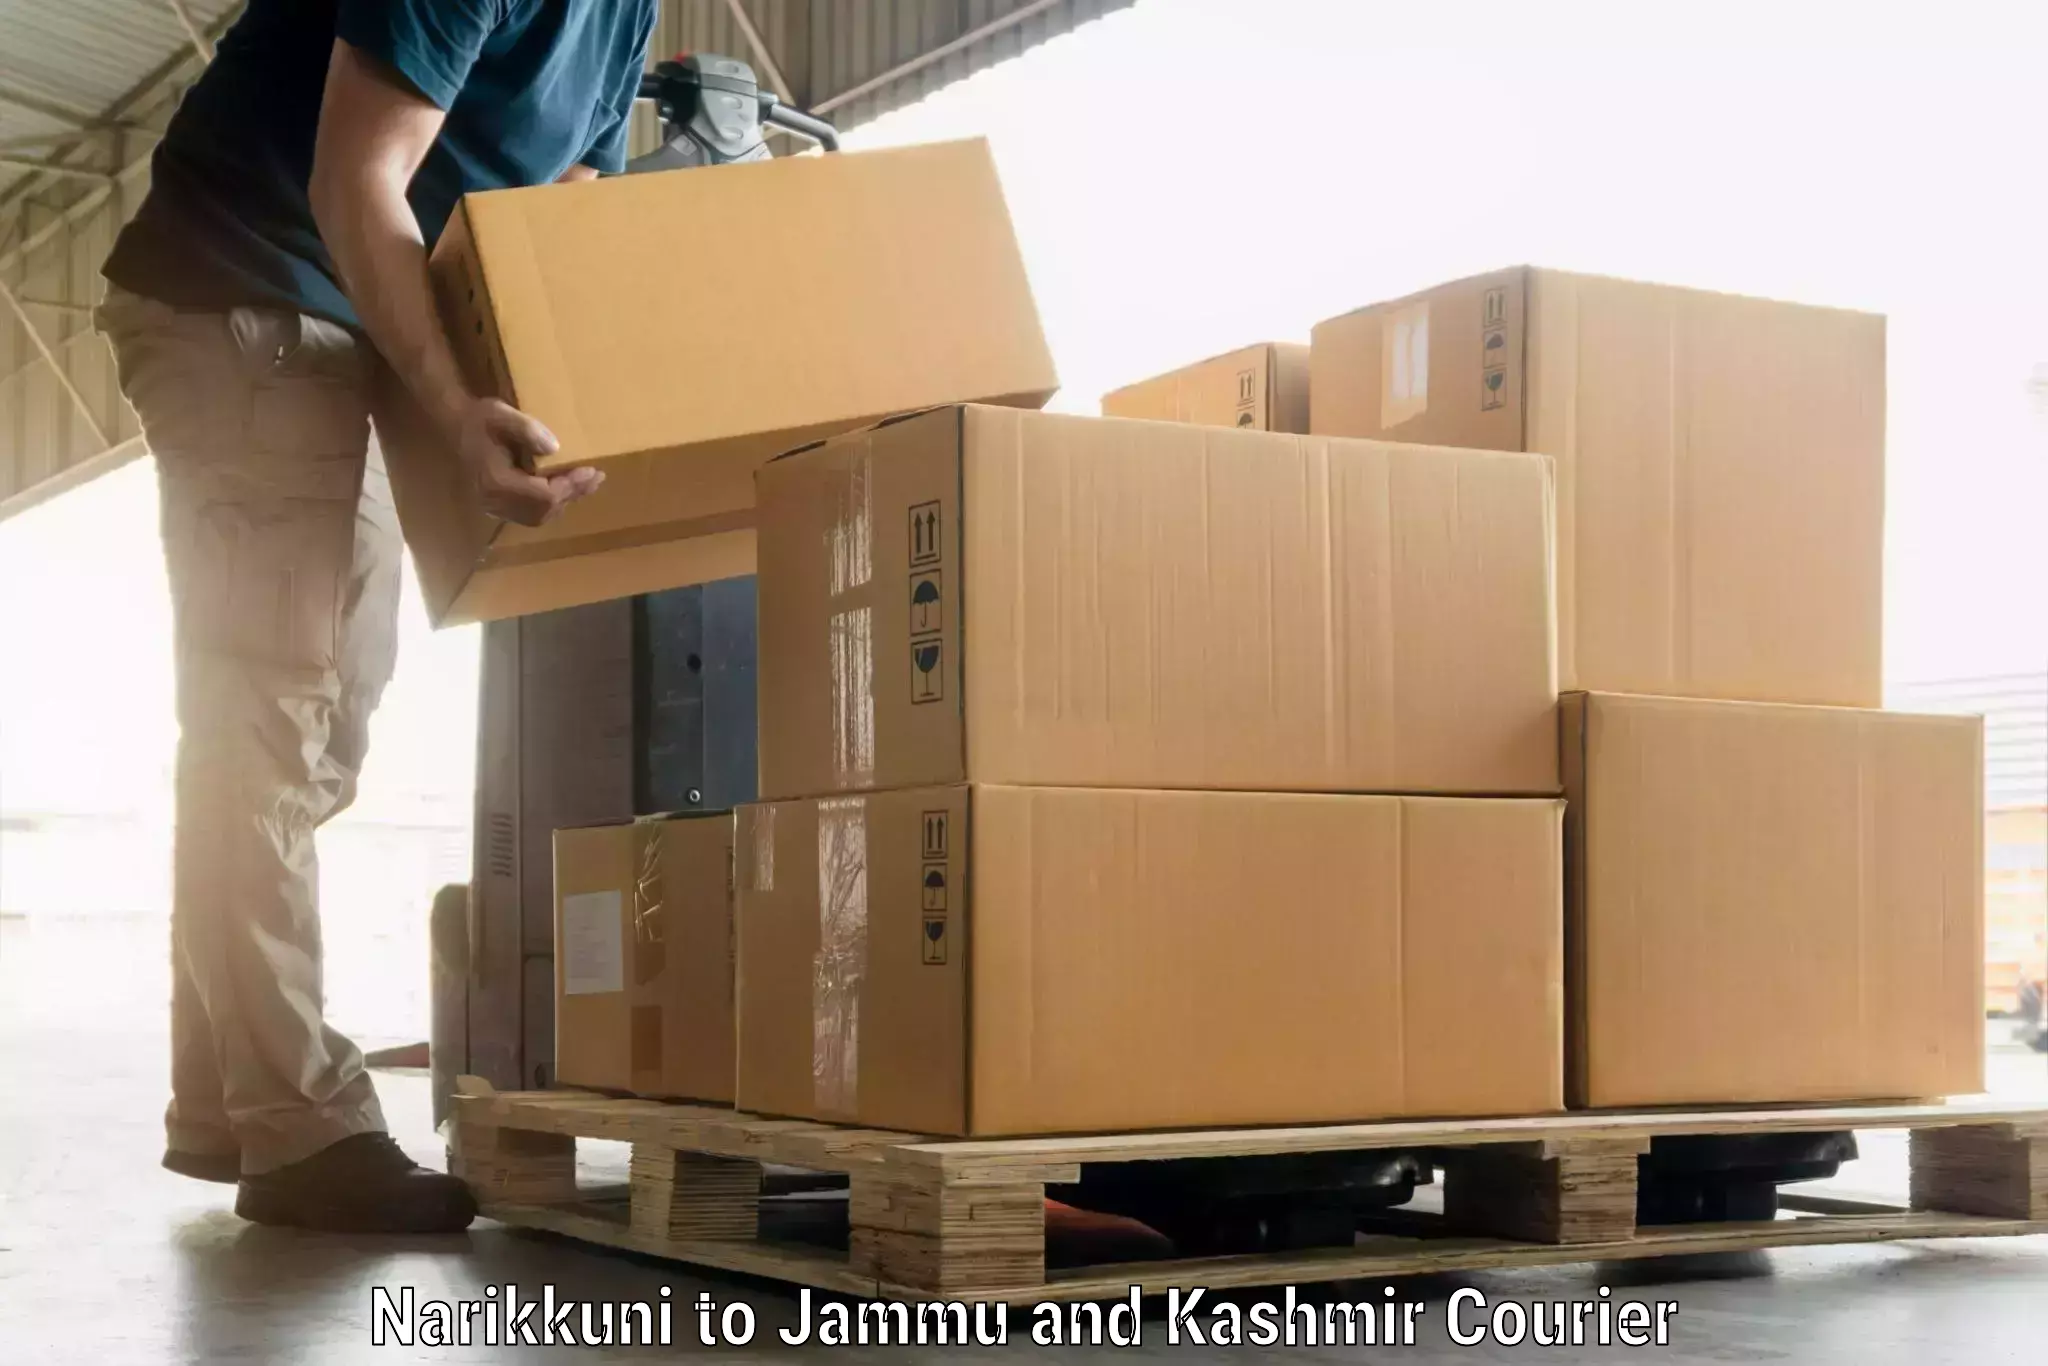 Baggage transport innovation Narikkuni to Jammu and Kashmir